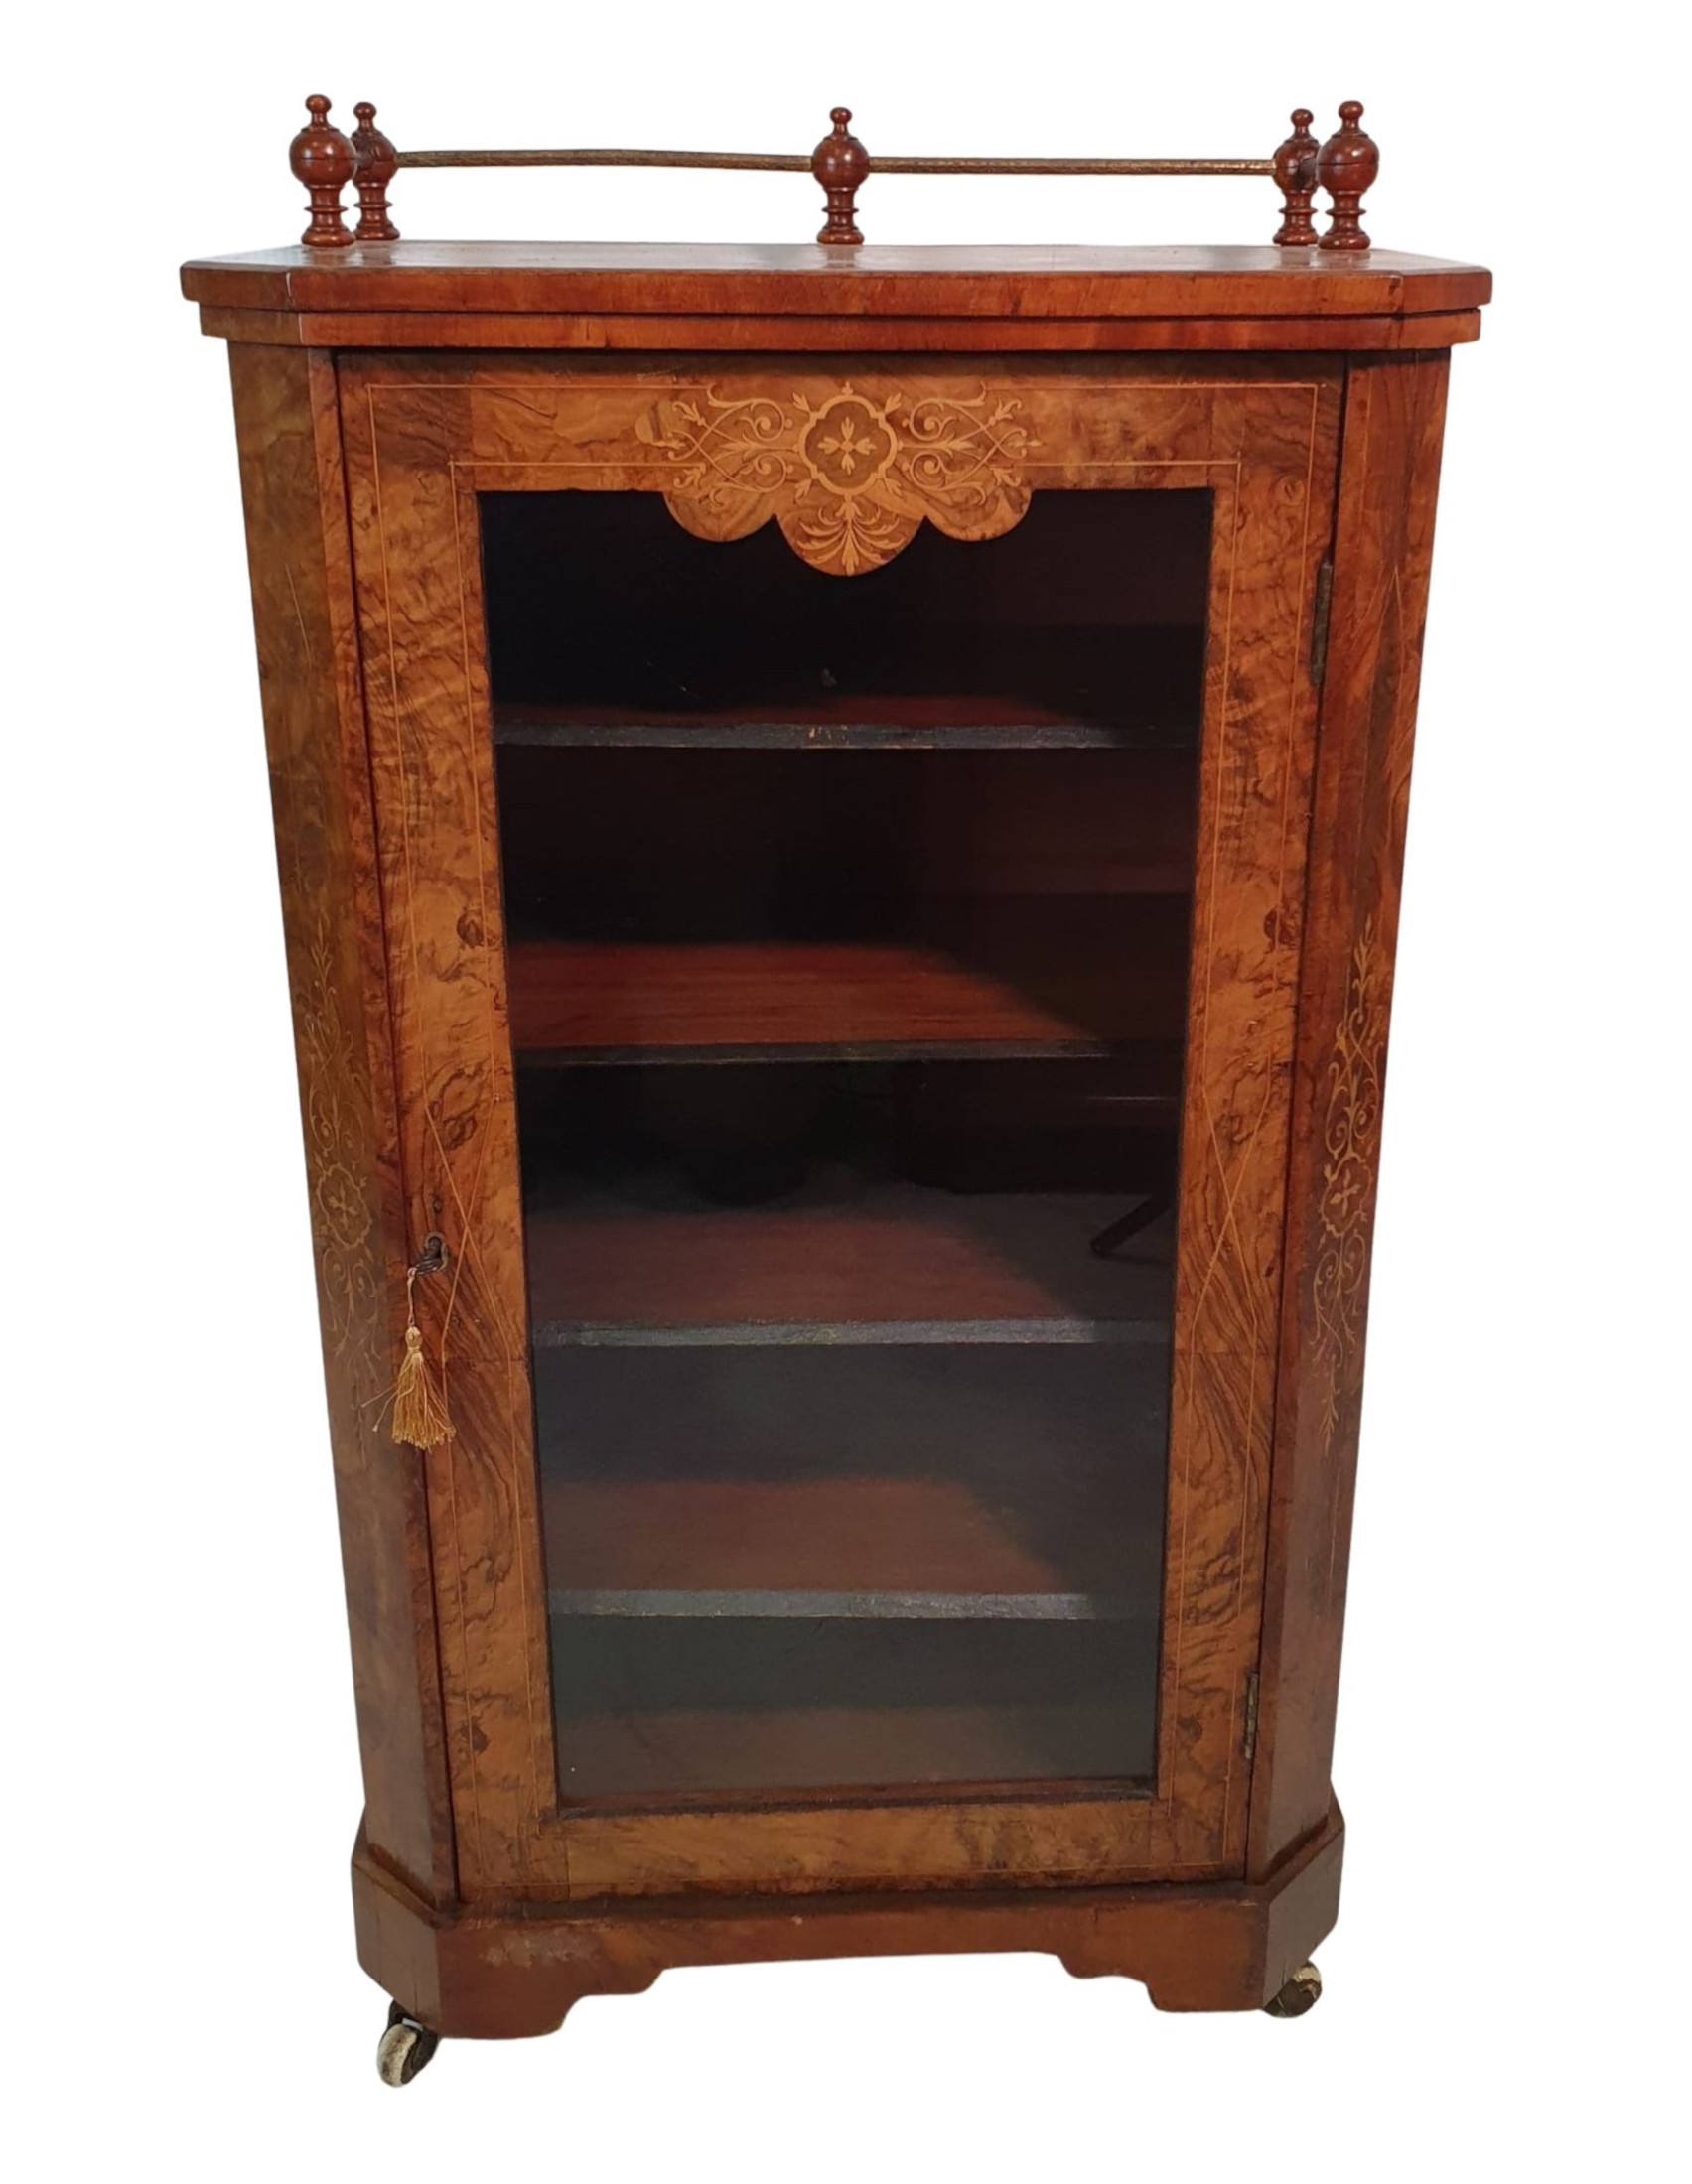 A Fine 19th Century Inlaid Burr Walnut Music Cabinet